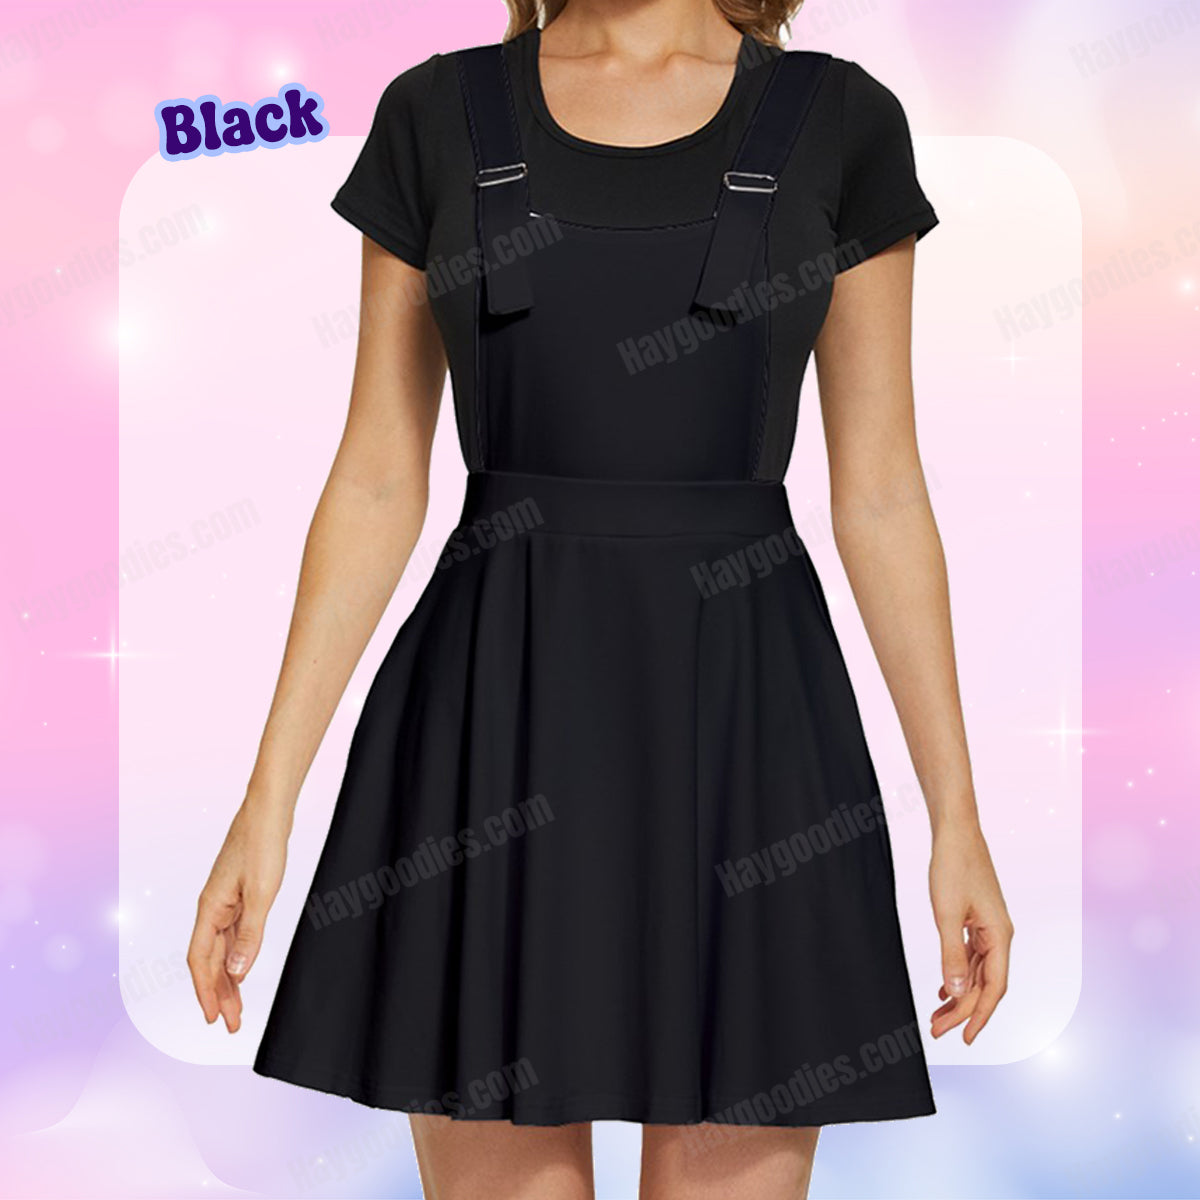 Black Overalls Dress-XS to 5XL